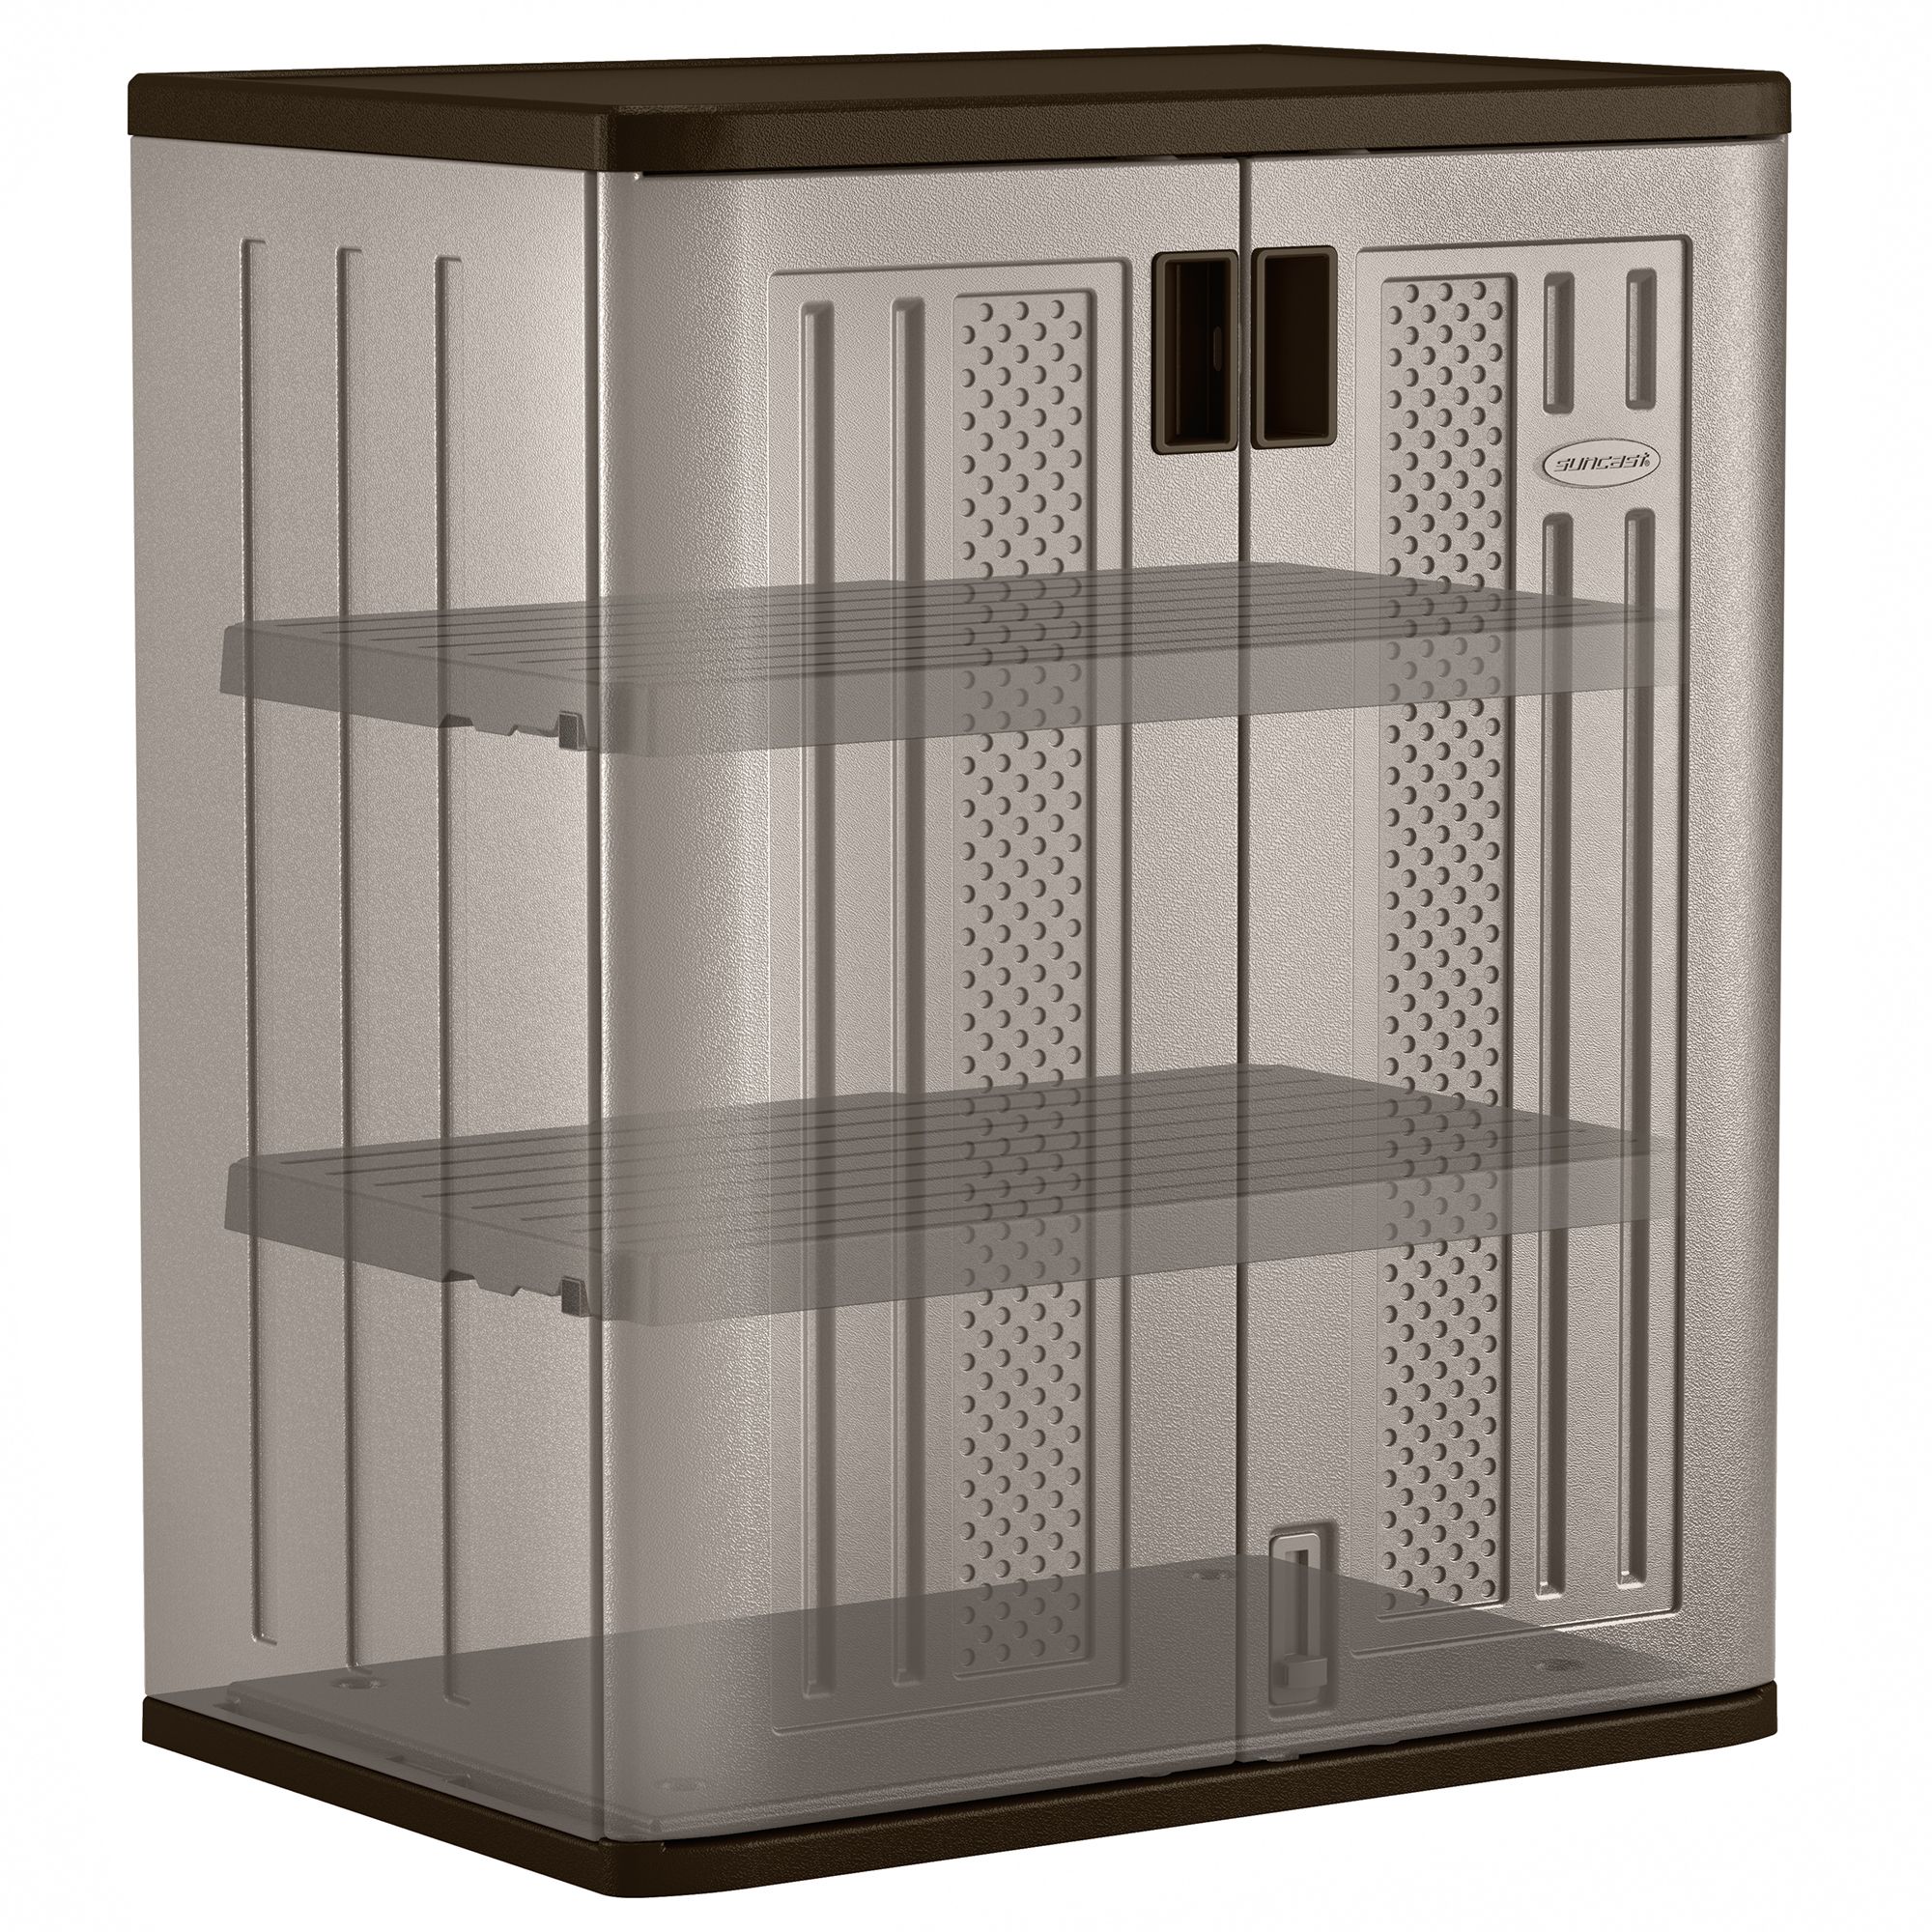 Suncast Plastic Freestanding Garage Cabinet in Gray (30-in W x 72